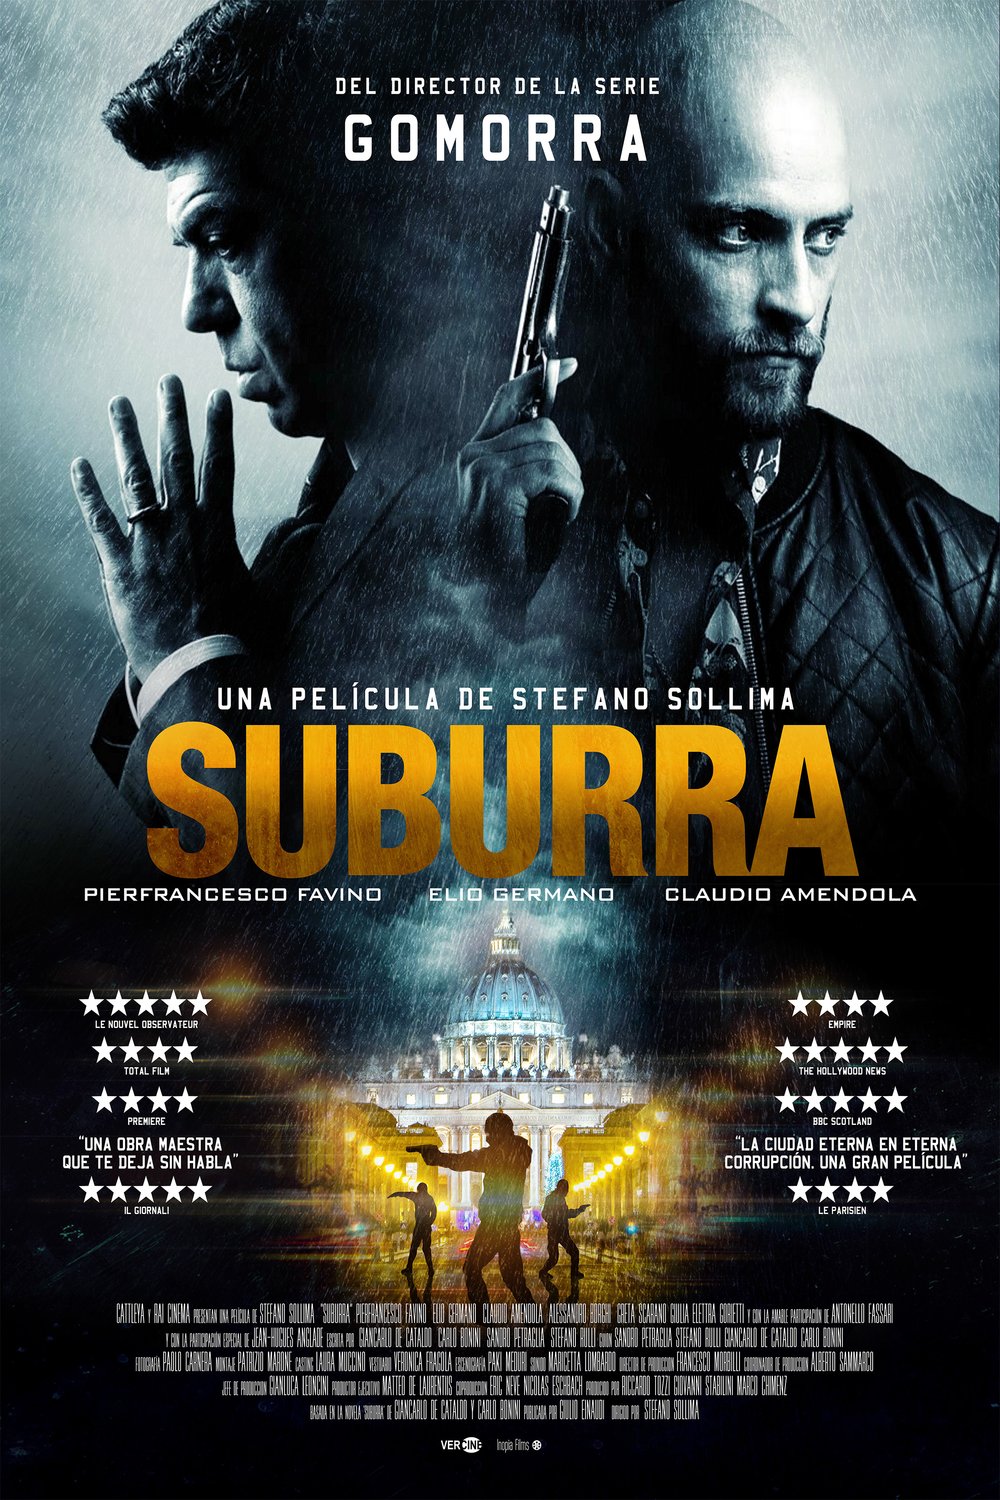 Italian poster of the movie Suburra